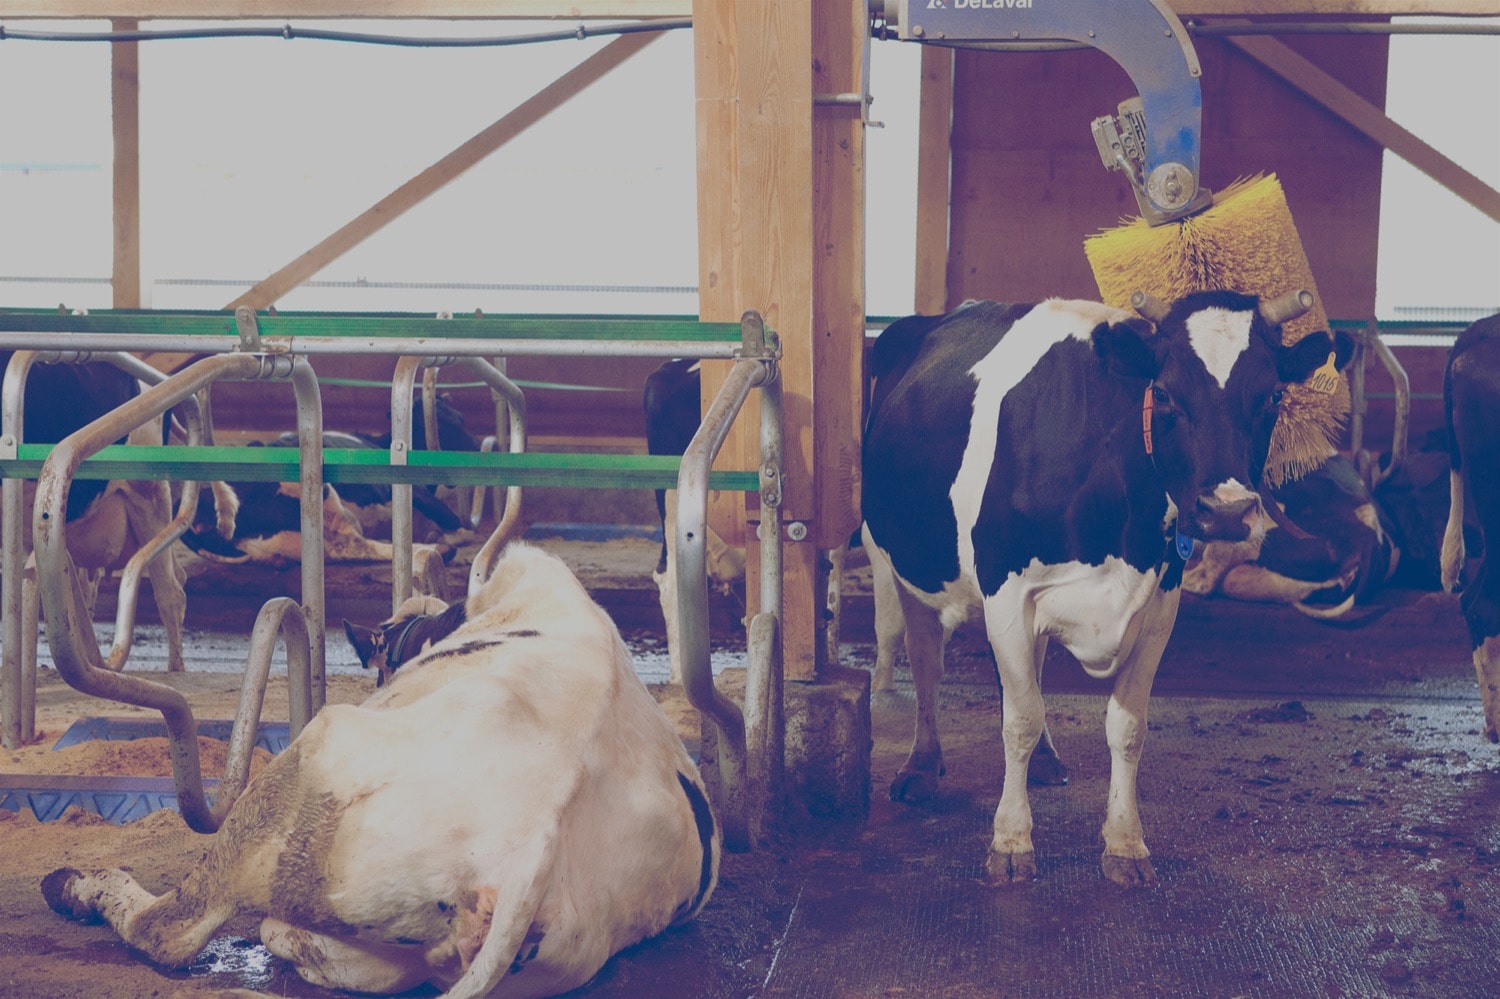 Three cows inside a milking facility.